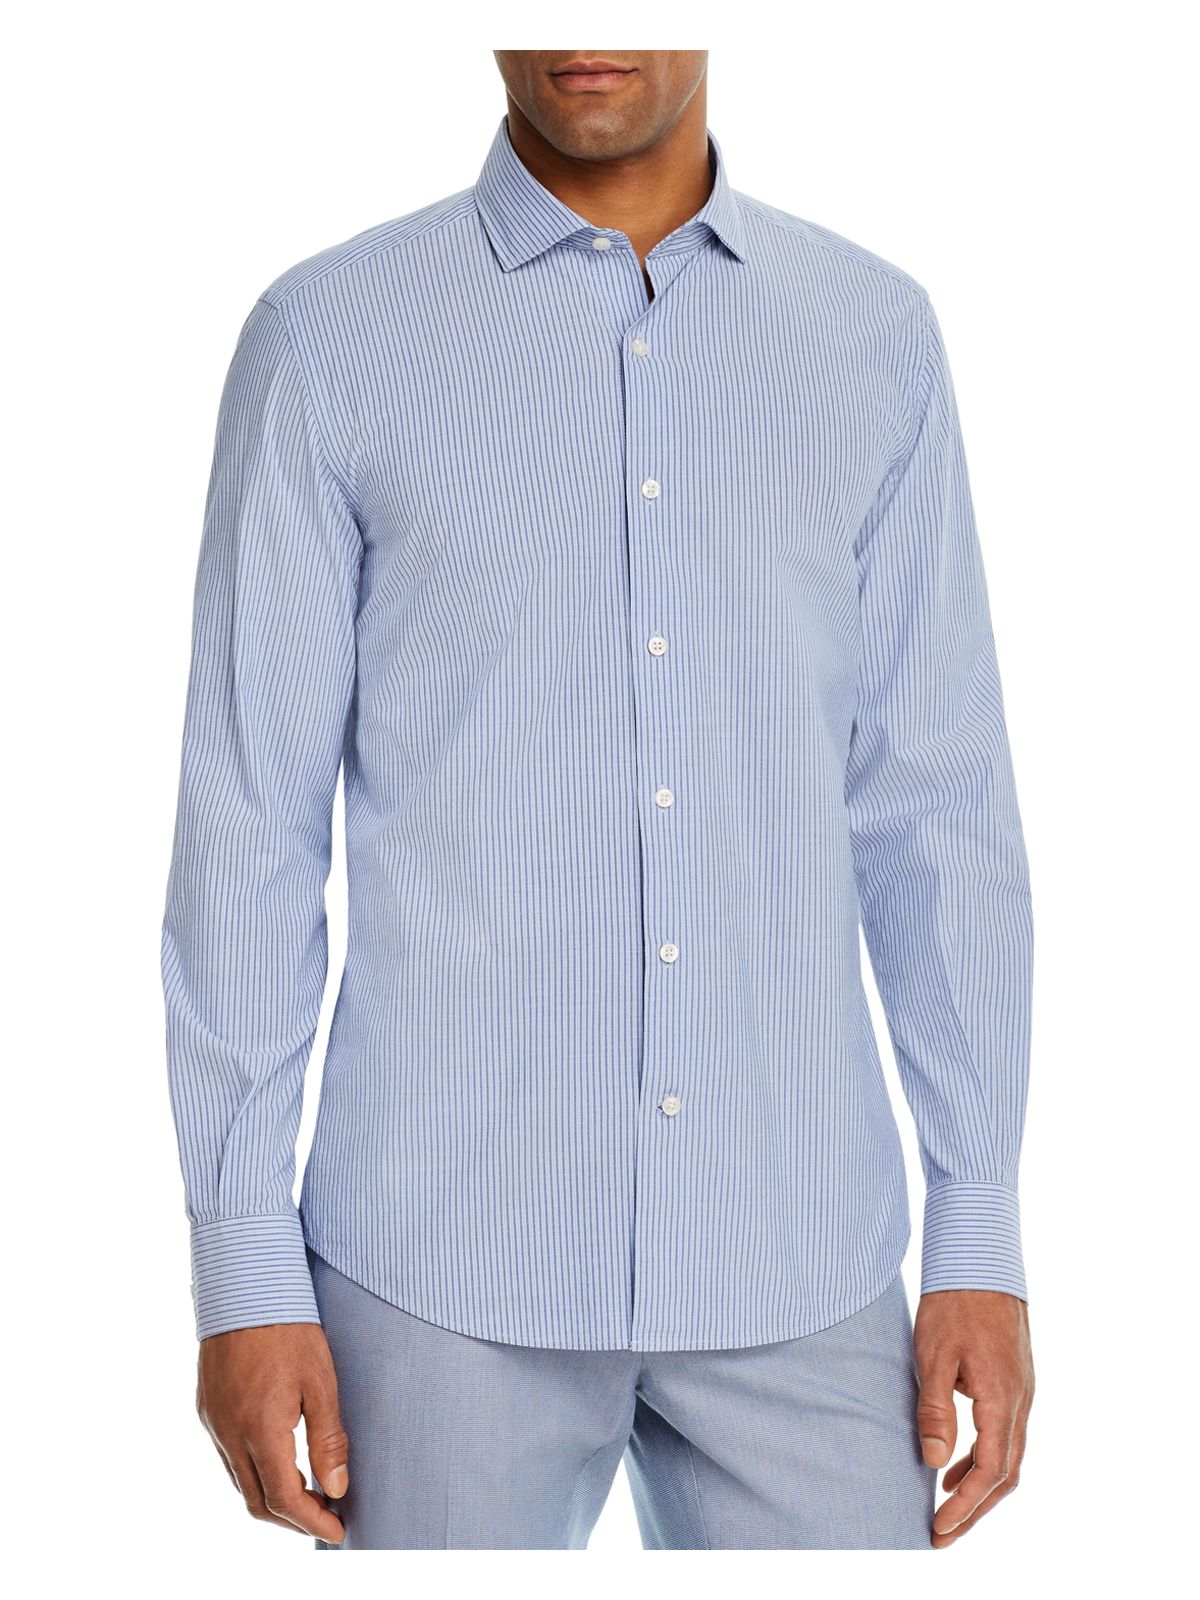 DYLAN GRAY Mens Light Blue Long Sleeve Button Down Casual Shirt L